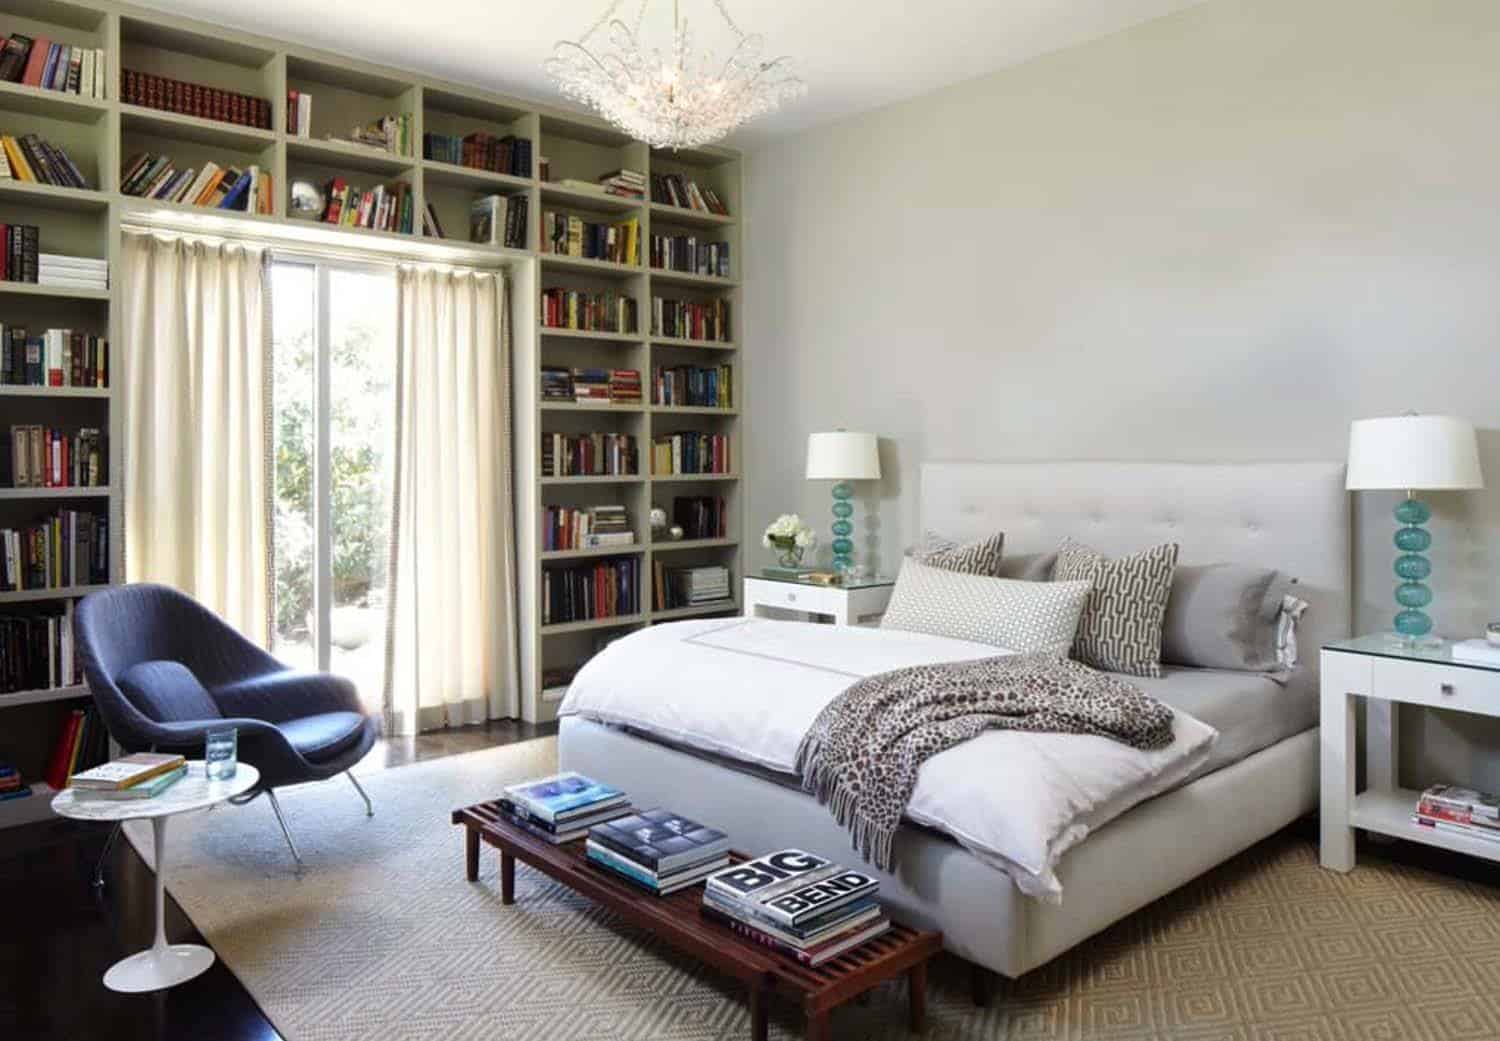 35 Wonderfully stylish mid-century modern bedrooms